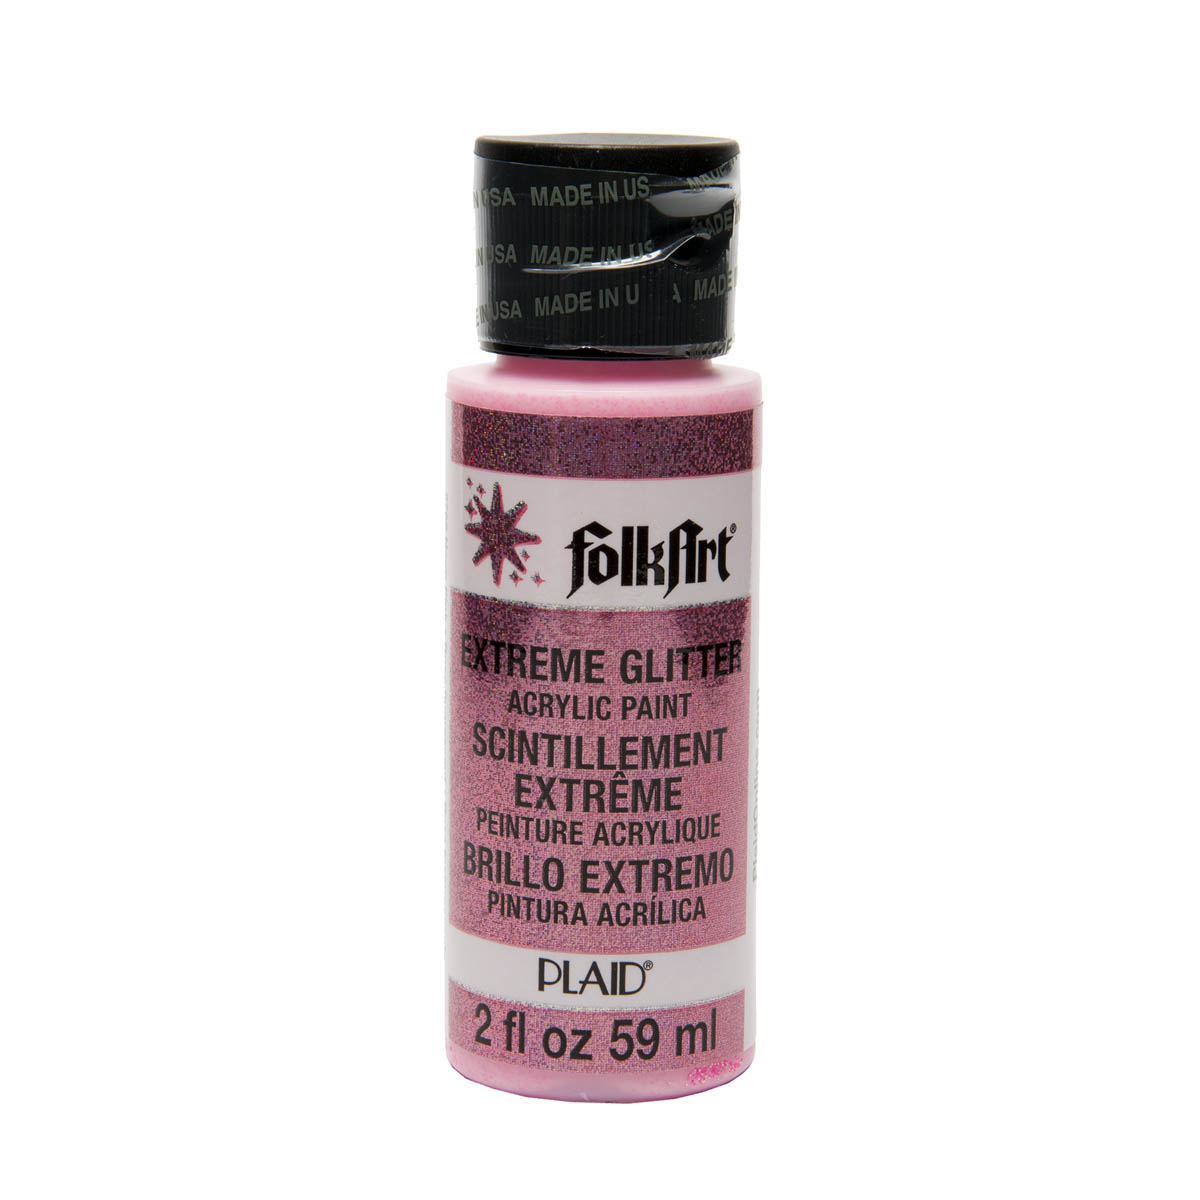 FolkArt ® Extreme Glitter™ - Neon Pink, 2 oz. - 2766